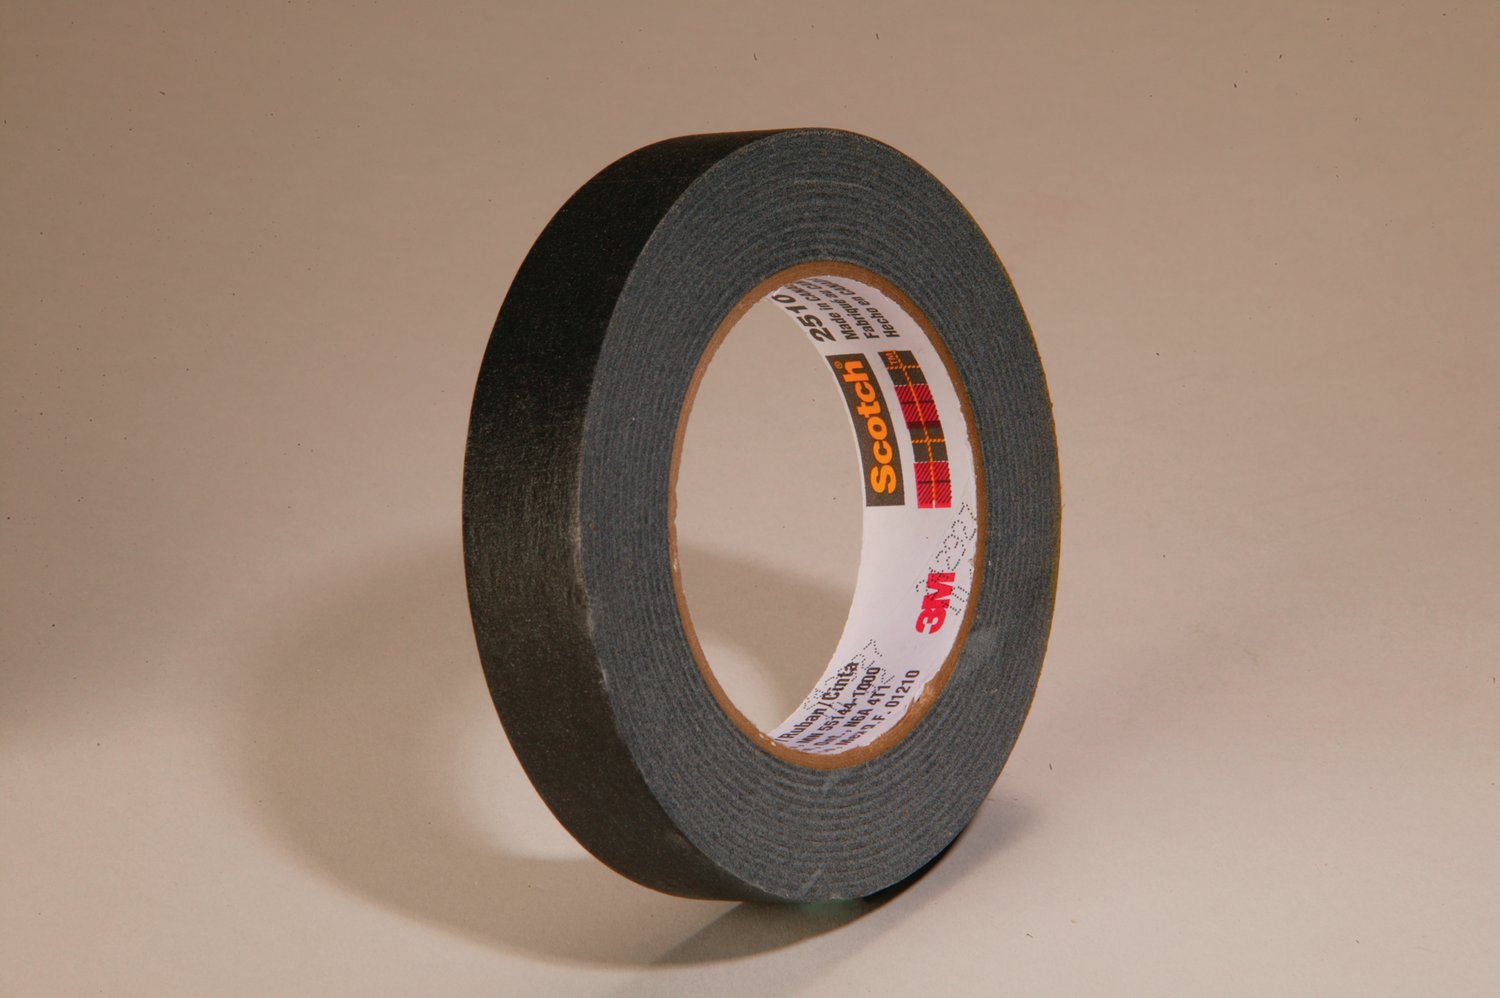 7000048938 - 3M Sealer Tape 2510 Black, 36 mm x 55 m, 5.6 mil, 24 Roll/Case